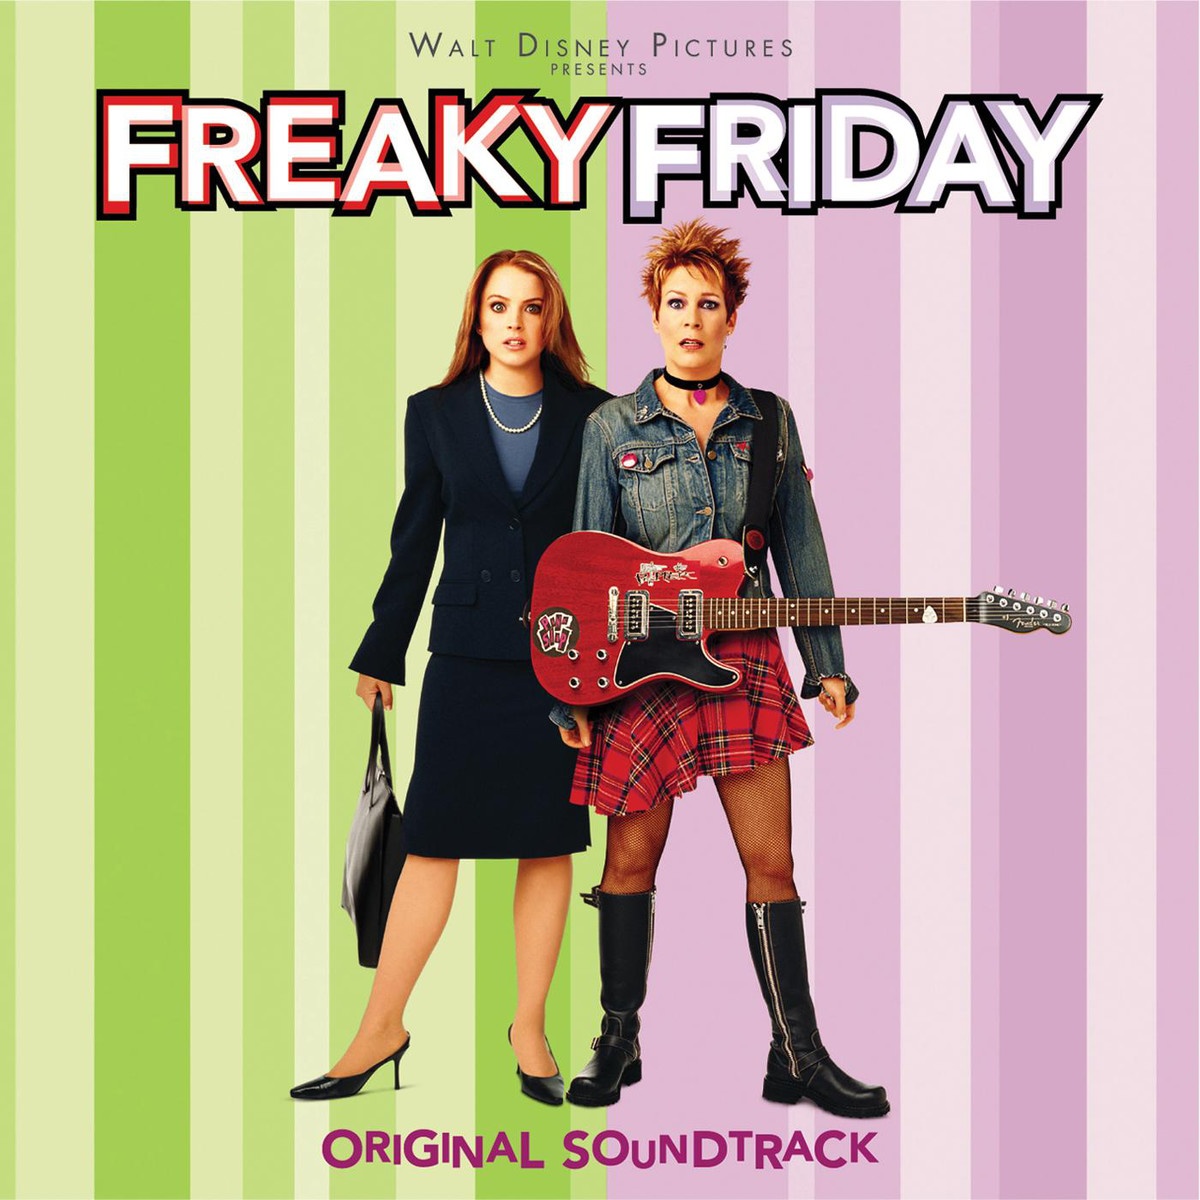 Freaky Friday (Original Soundtrack)